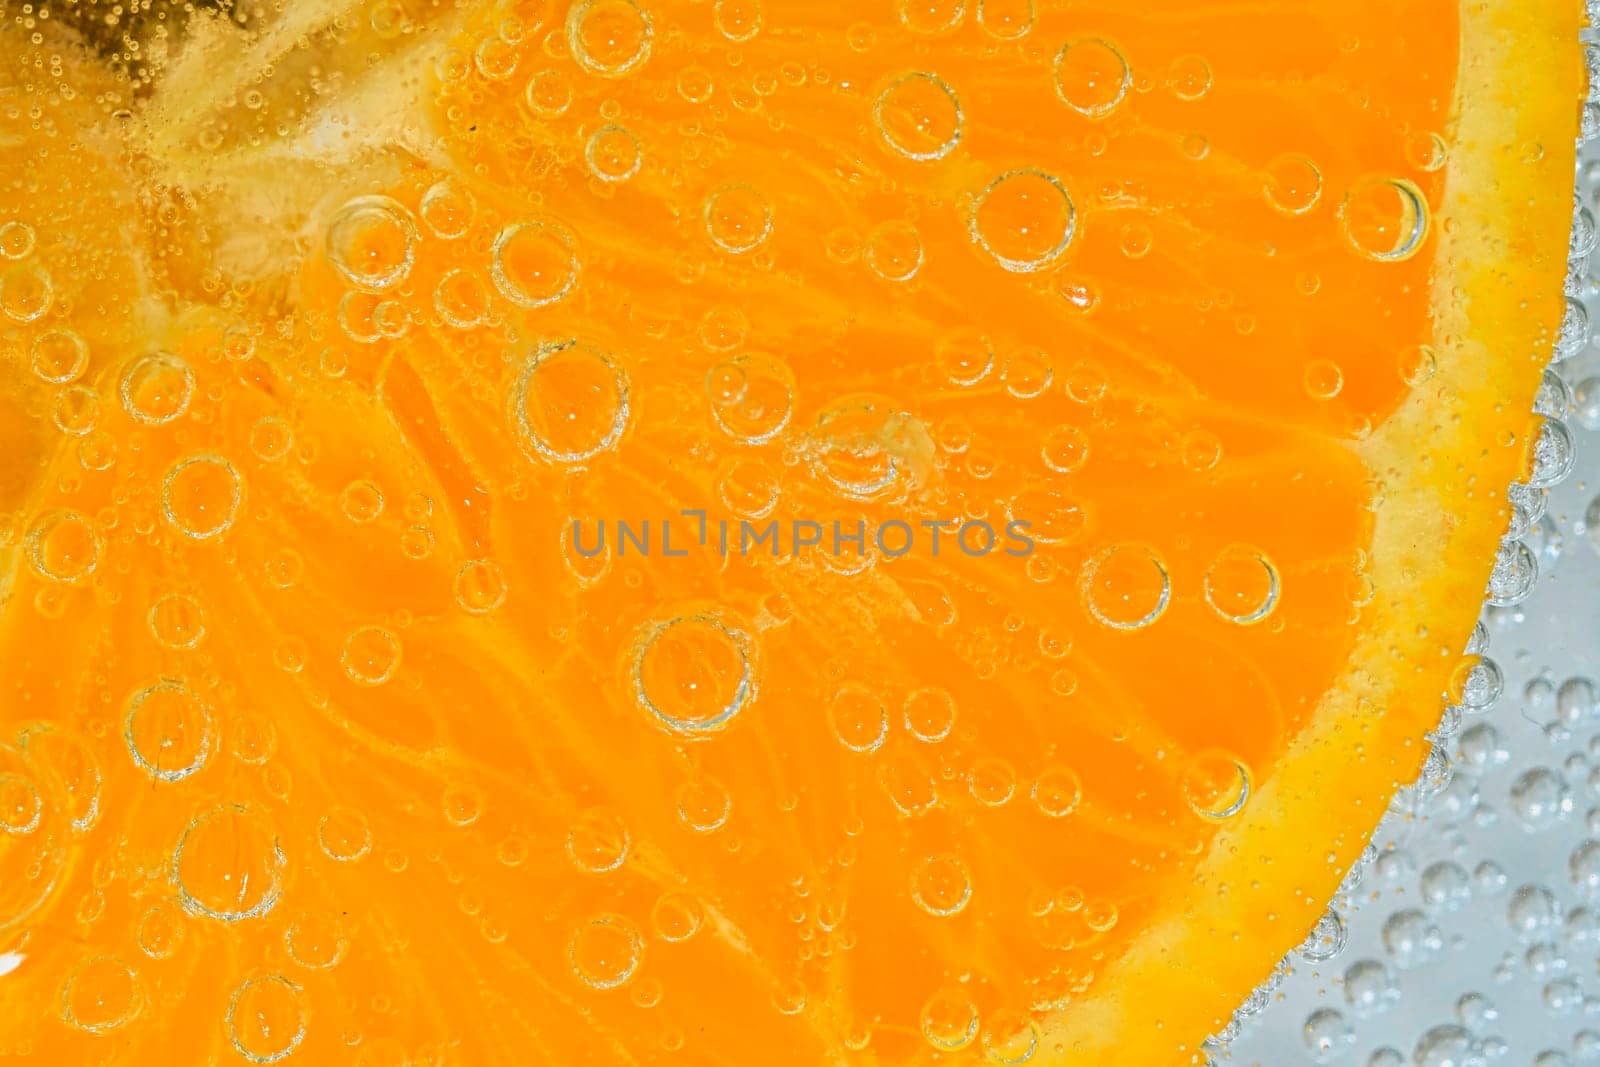 Close-up of an orange fruit slice in liquid with bubbles. Slice of ripe orange fruit in water. Close-up of fresh orange fruit slice covered by bubbles. Macro horizontal image